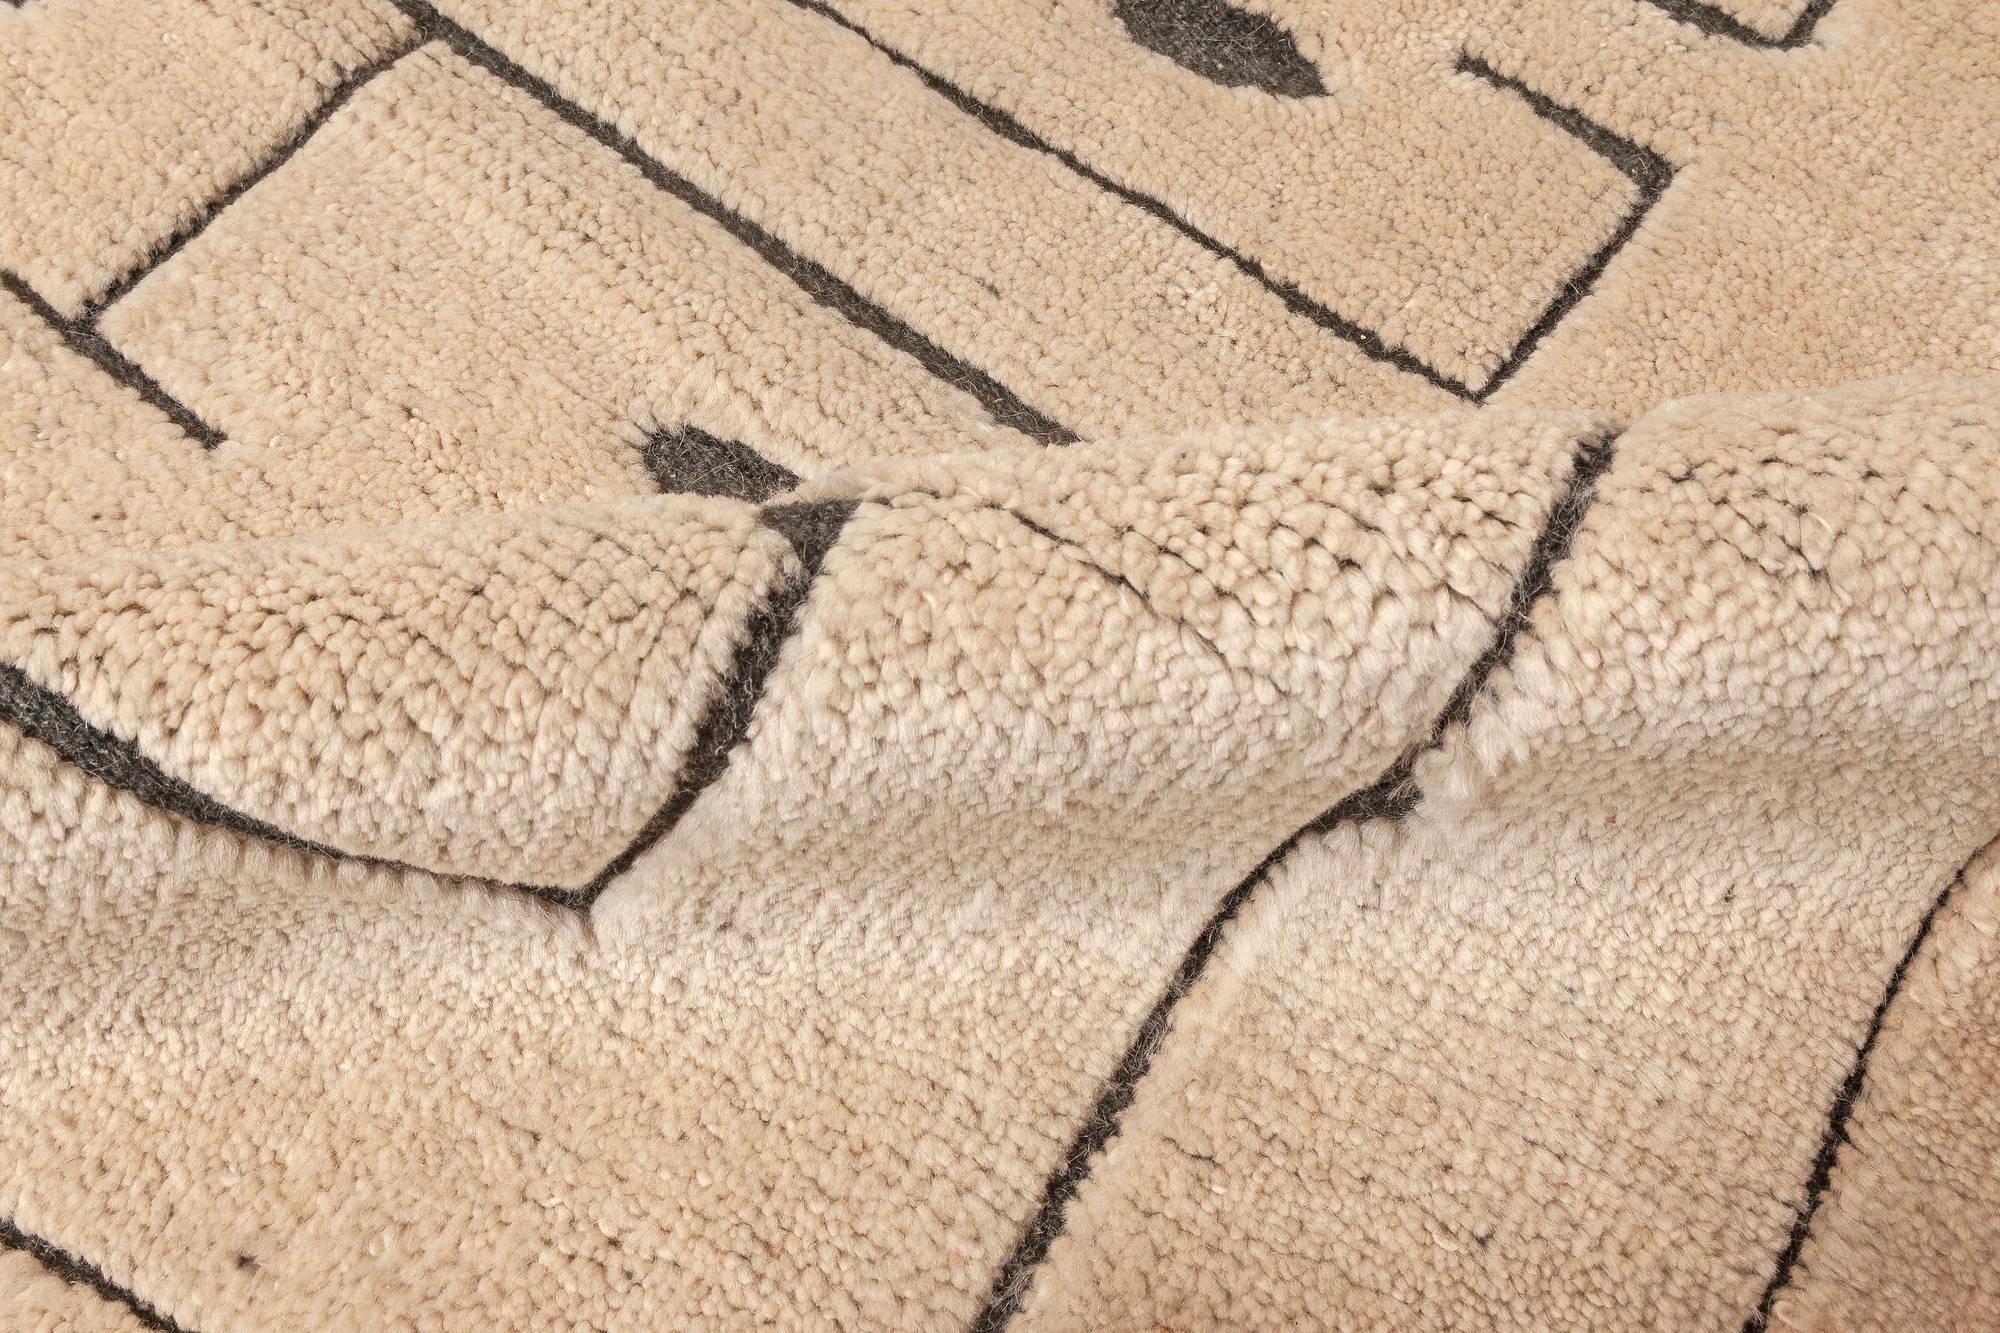 Contemporary Swedish Skvattram style rug by Doris Leslie Blau
Size: 14'5